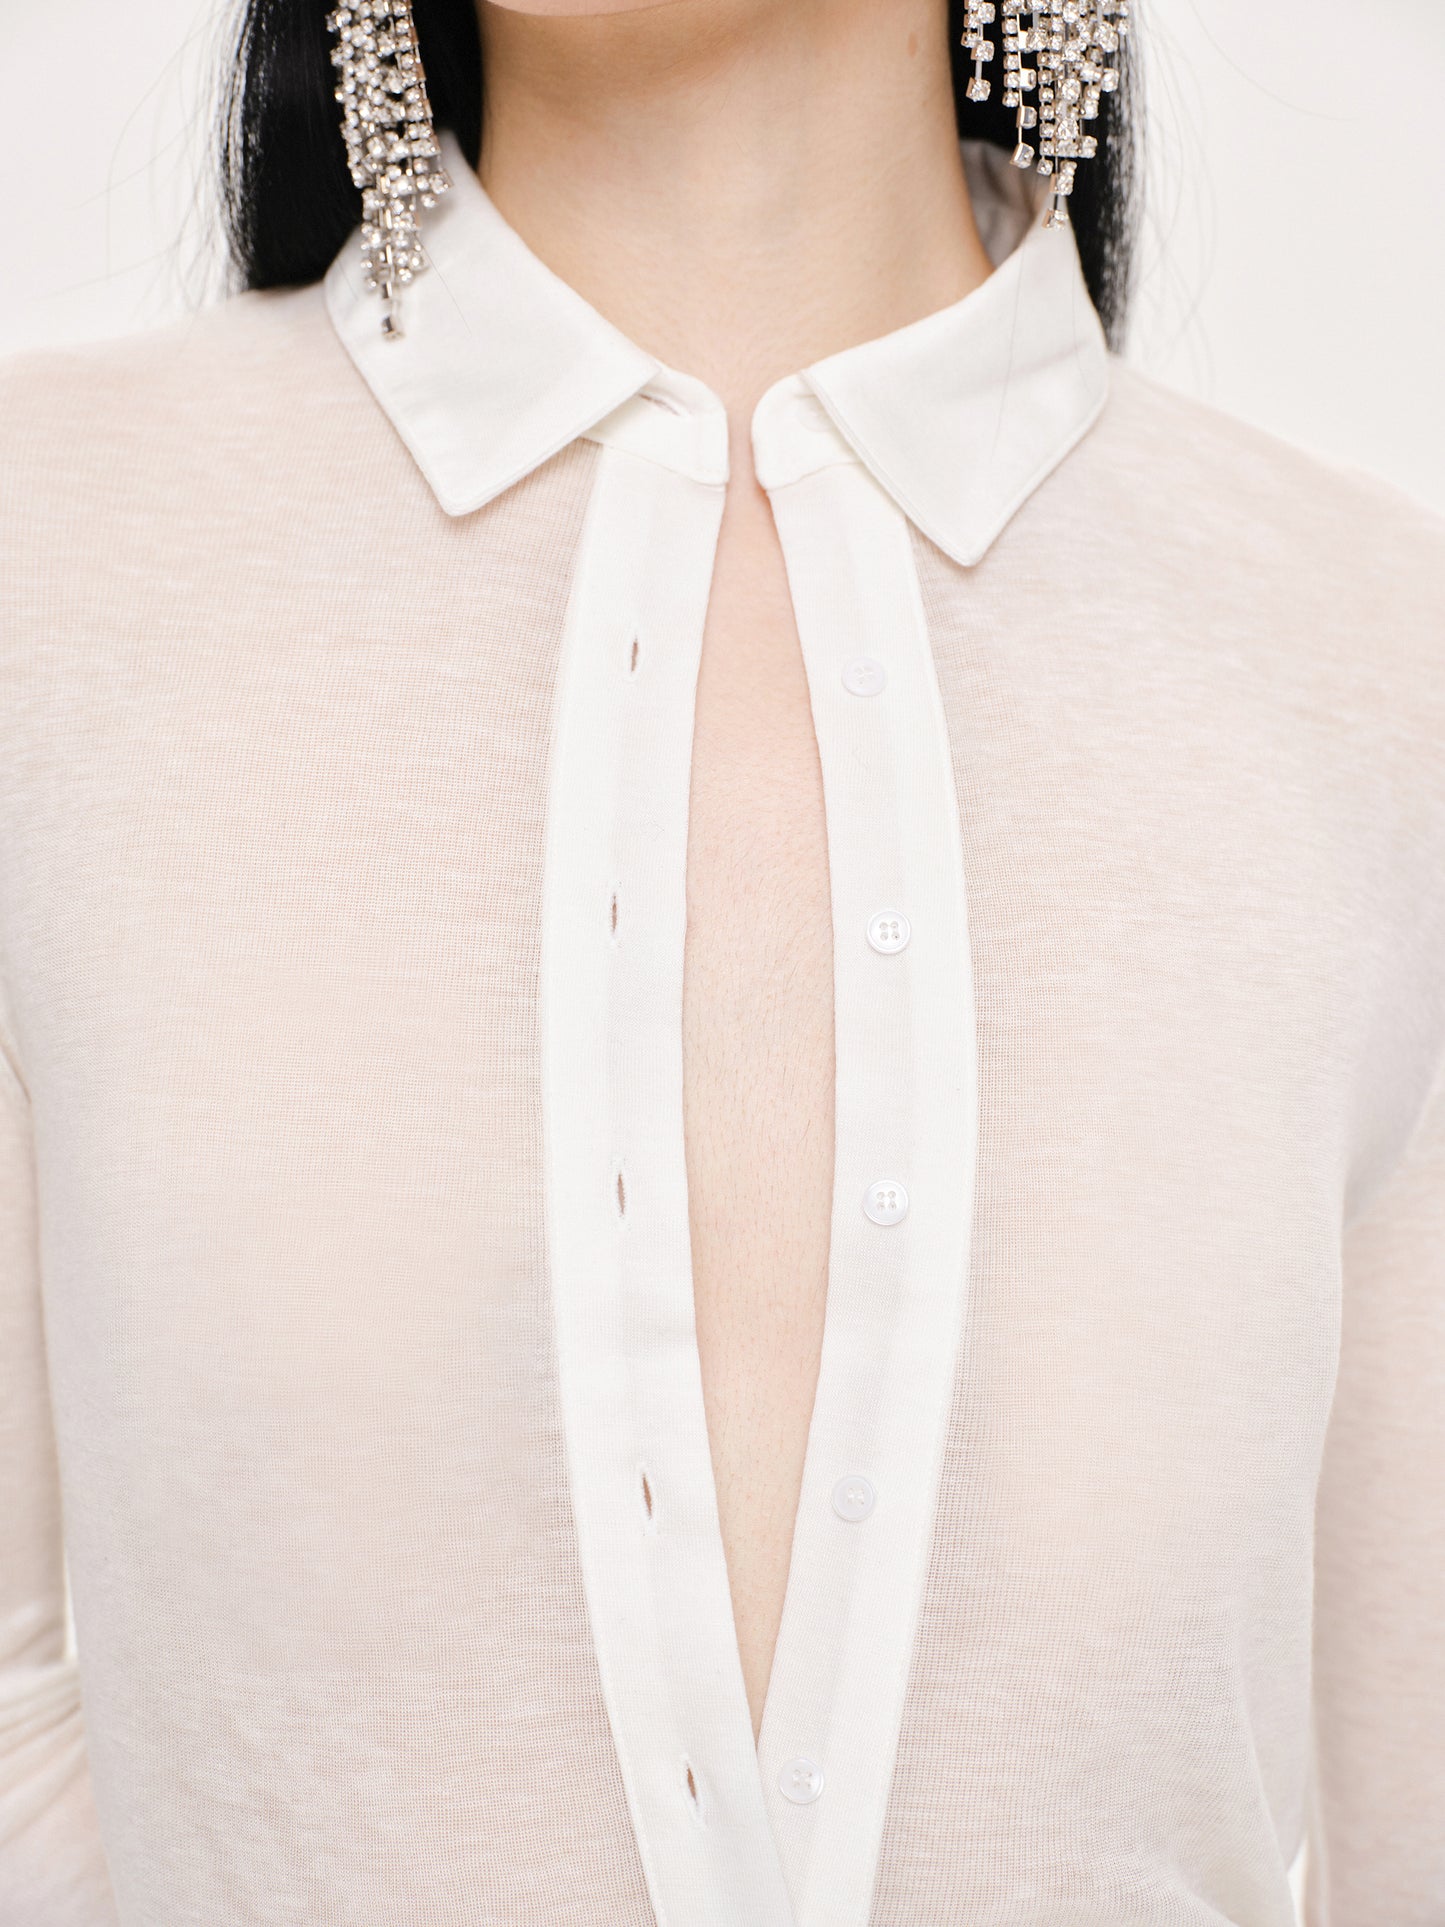 Pietro Semi-Sheer Collar Top, White